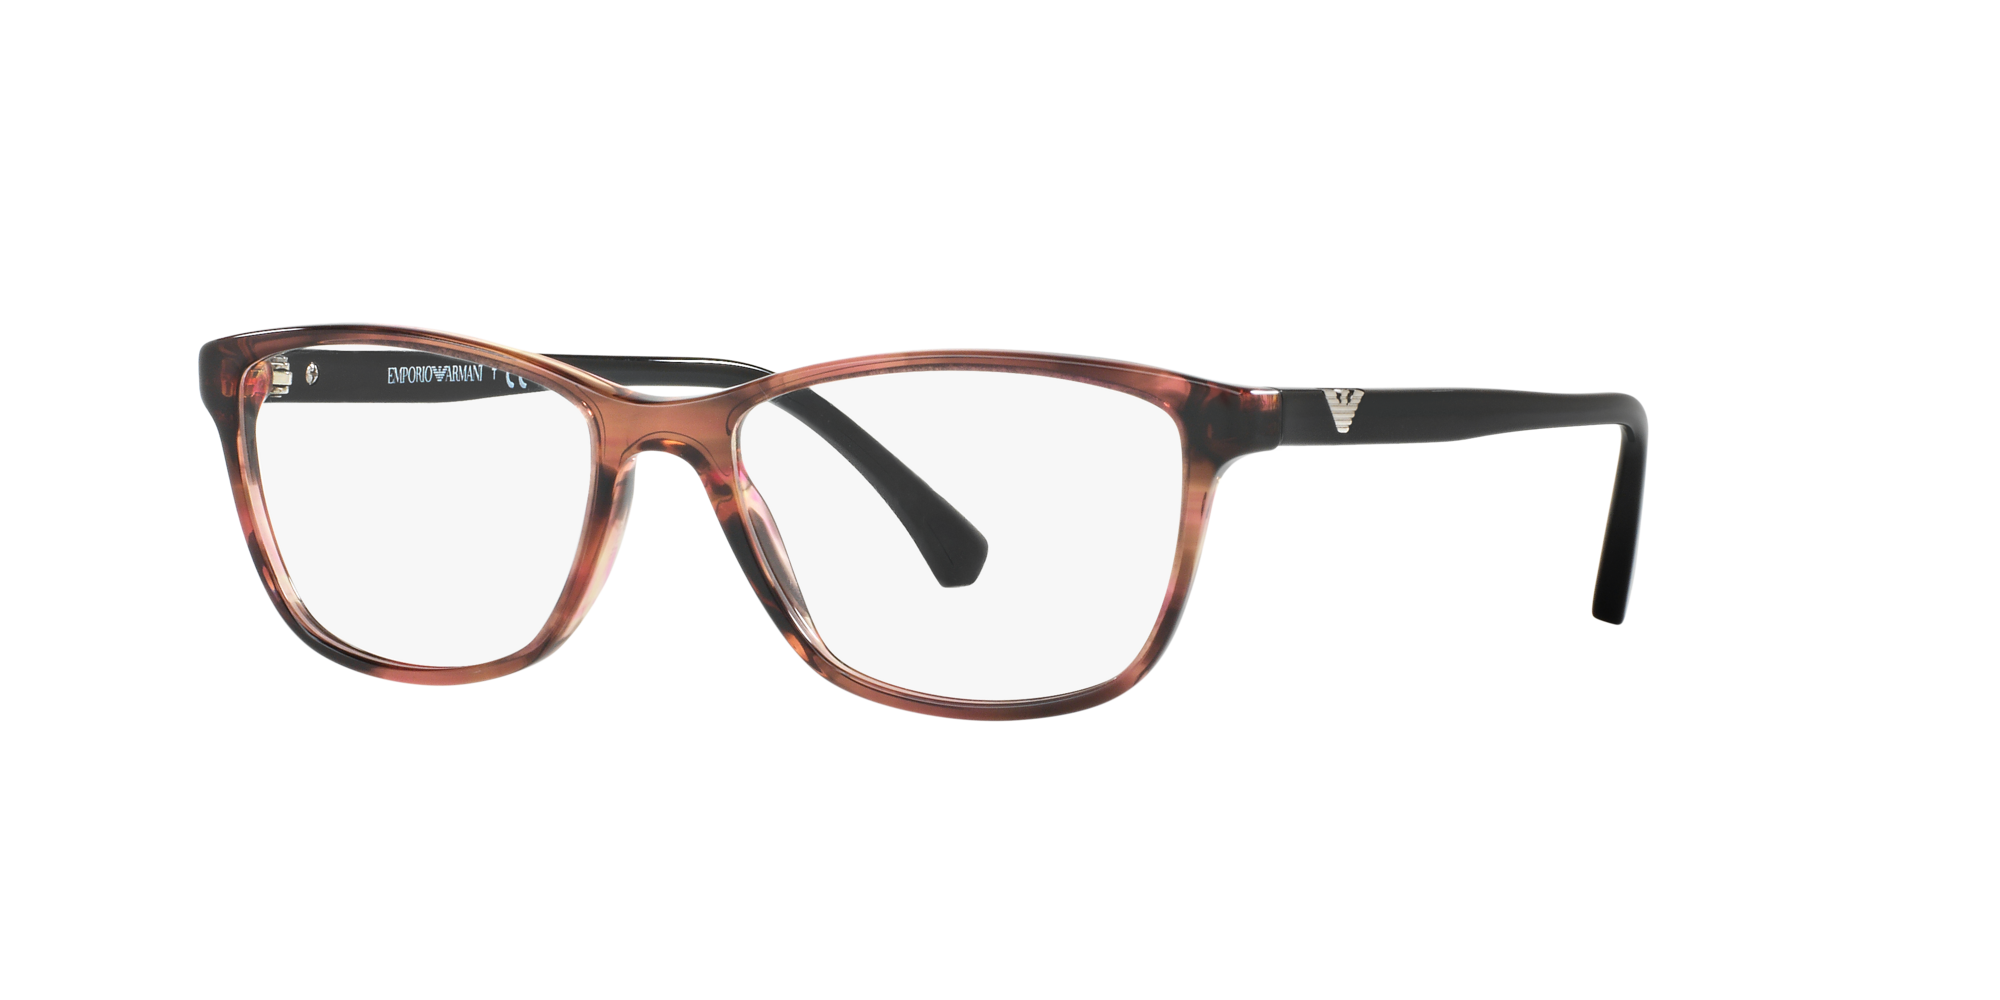 Angle_Left01 Emporio Armani EA 3099 (5553) Glasses Transparent / Pink